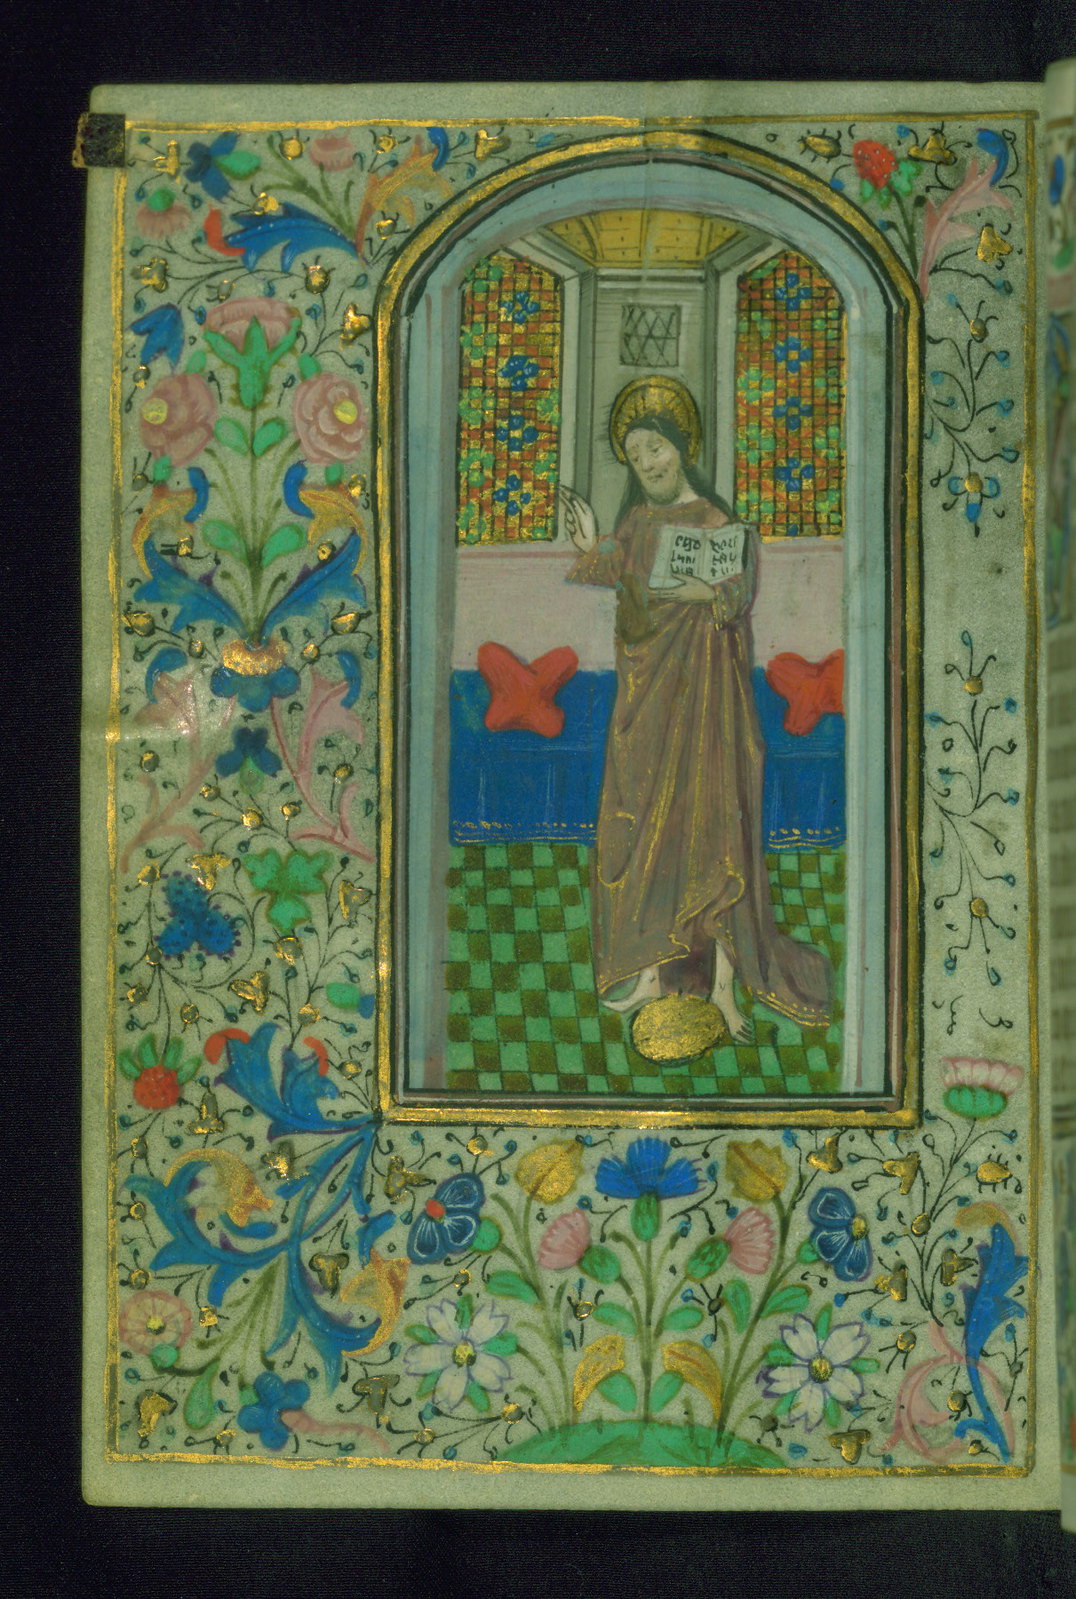 1460-70 Book of Hours, Salvator Mundi, Walters Manuscript W.202, fol. 13v